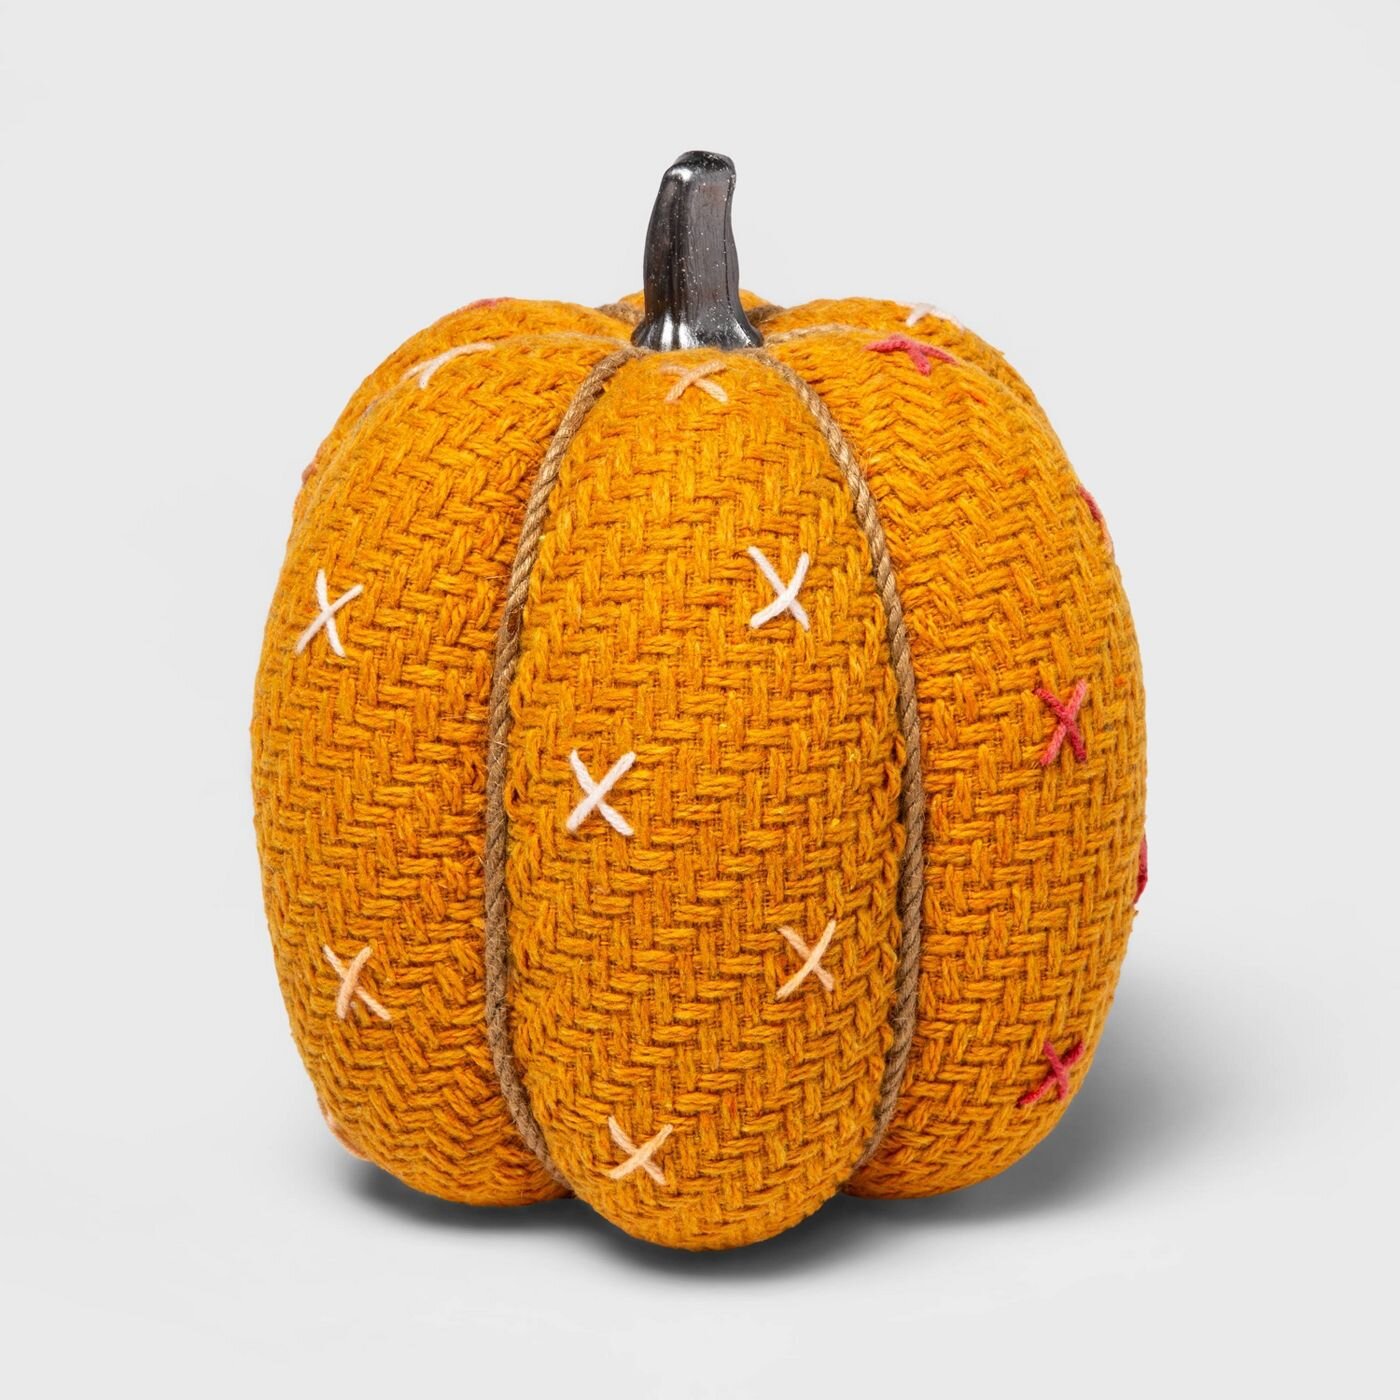 Large Tweed with Stitch Fabric Harvest Pumpkin.jpg